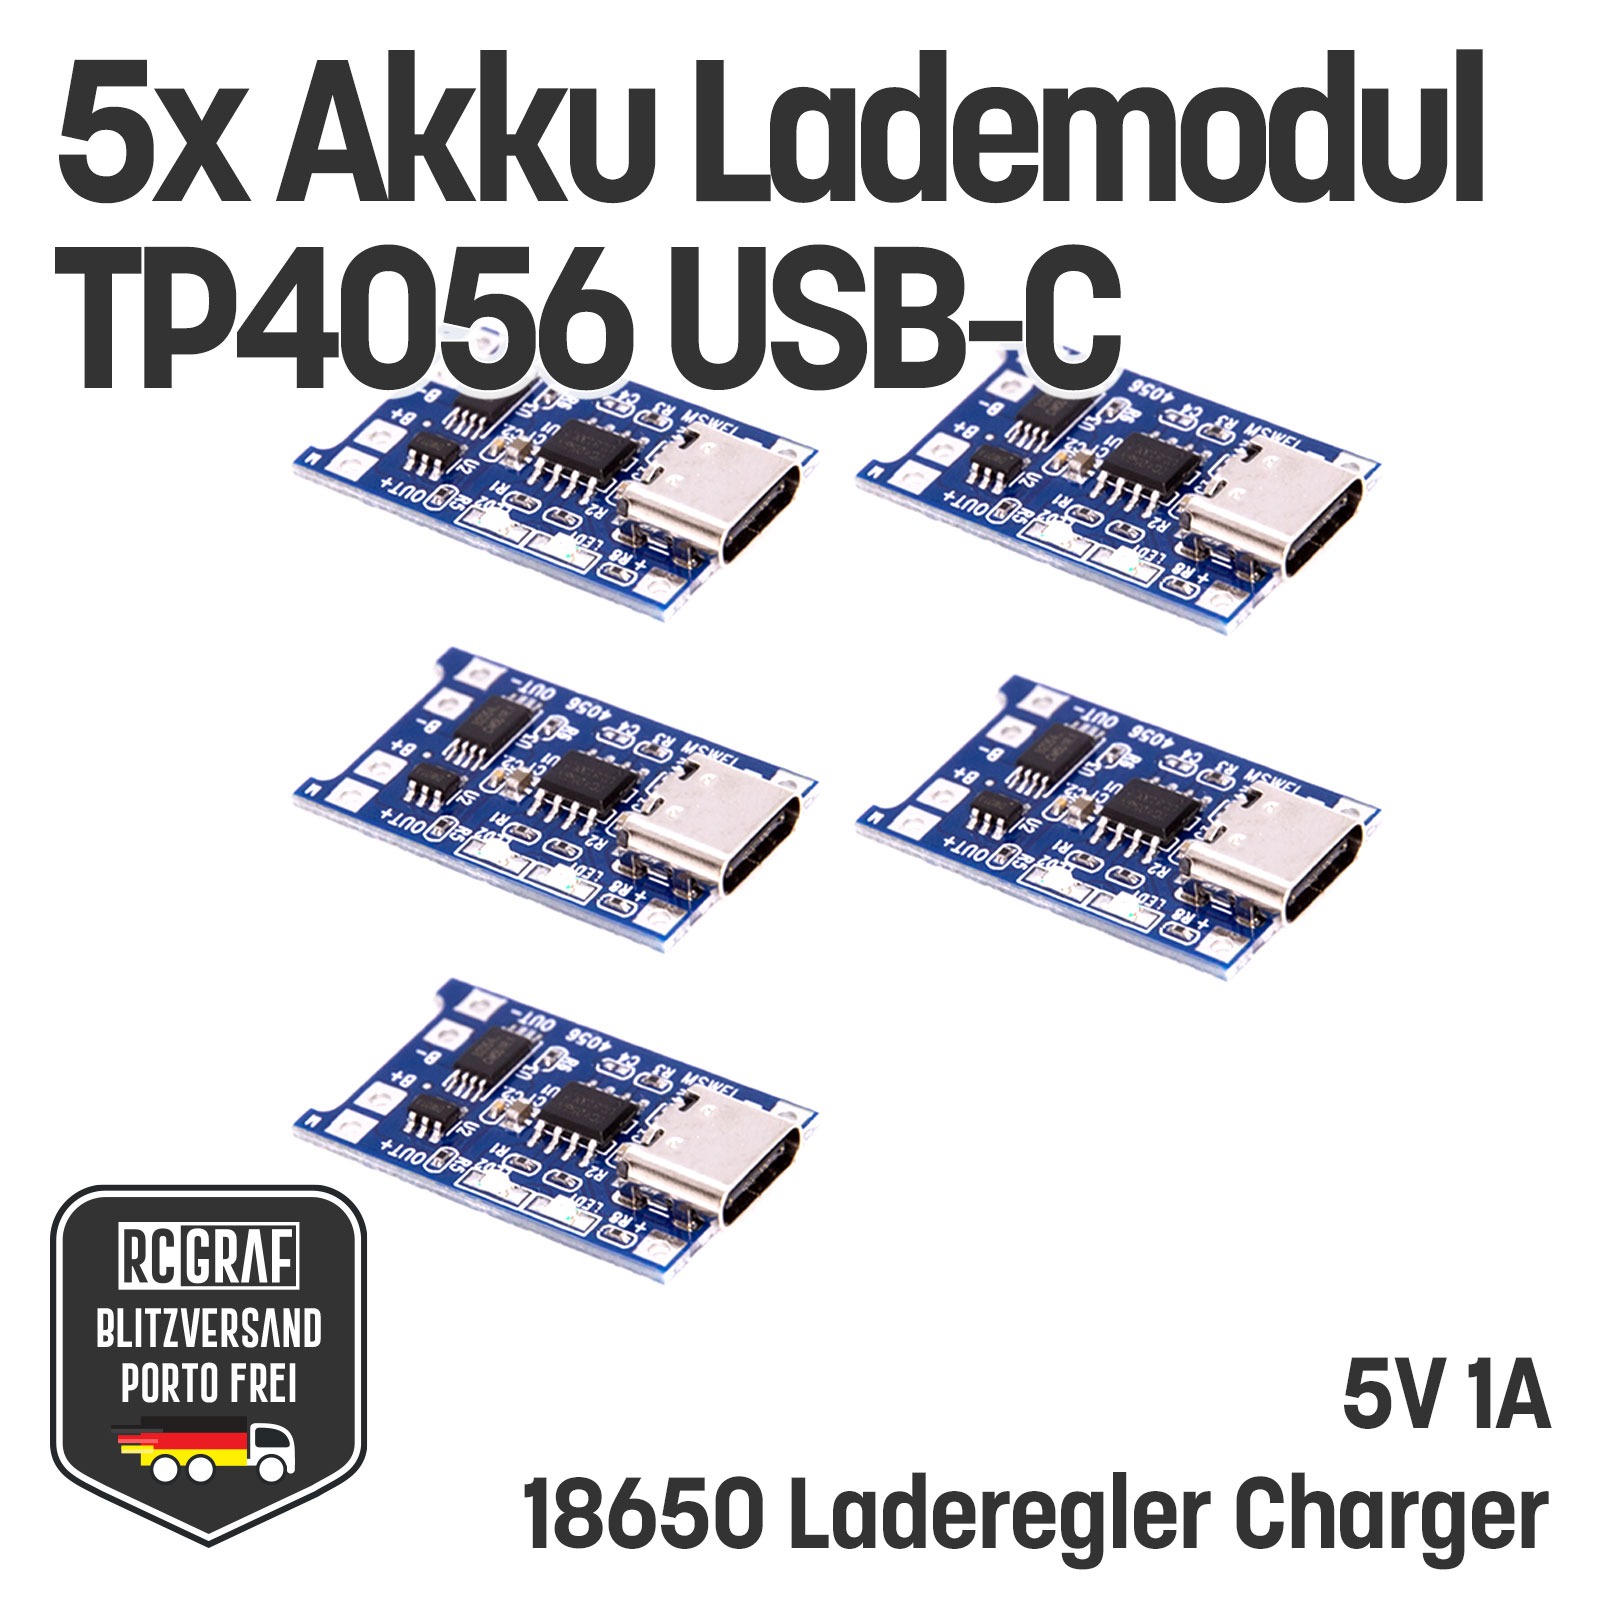 5x Akku Lademodul 5V 1A TP4056 USB C